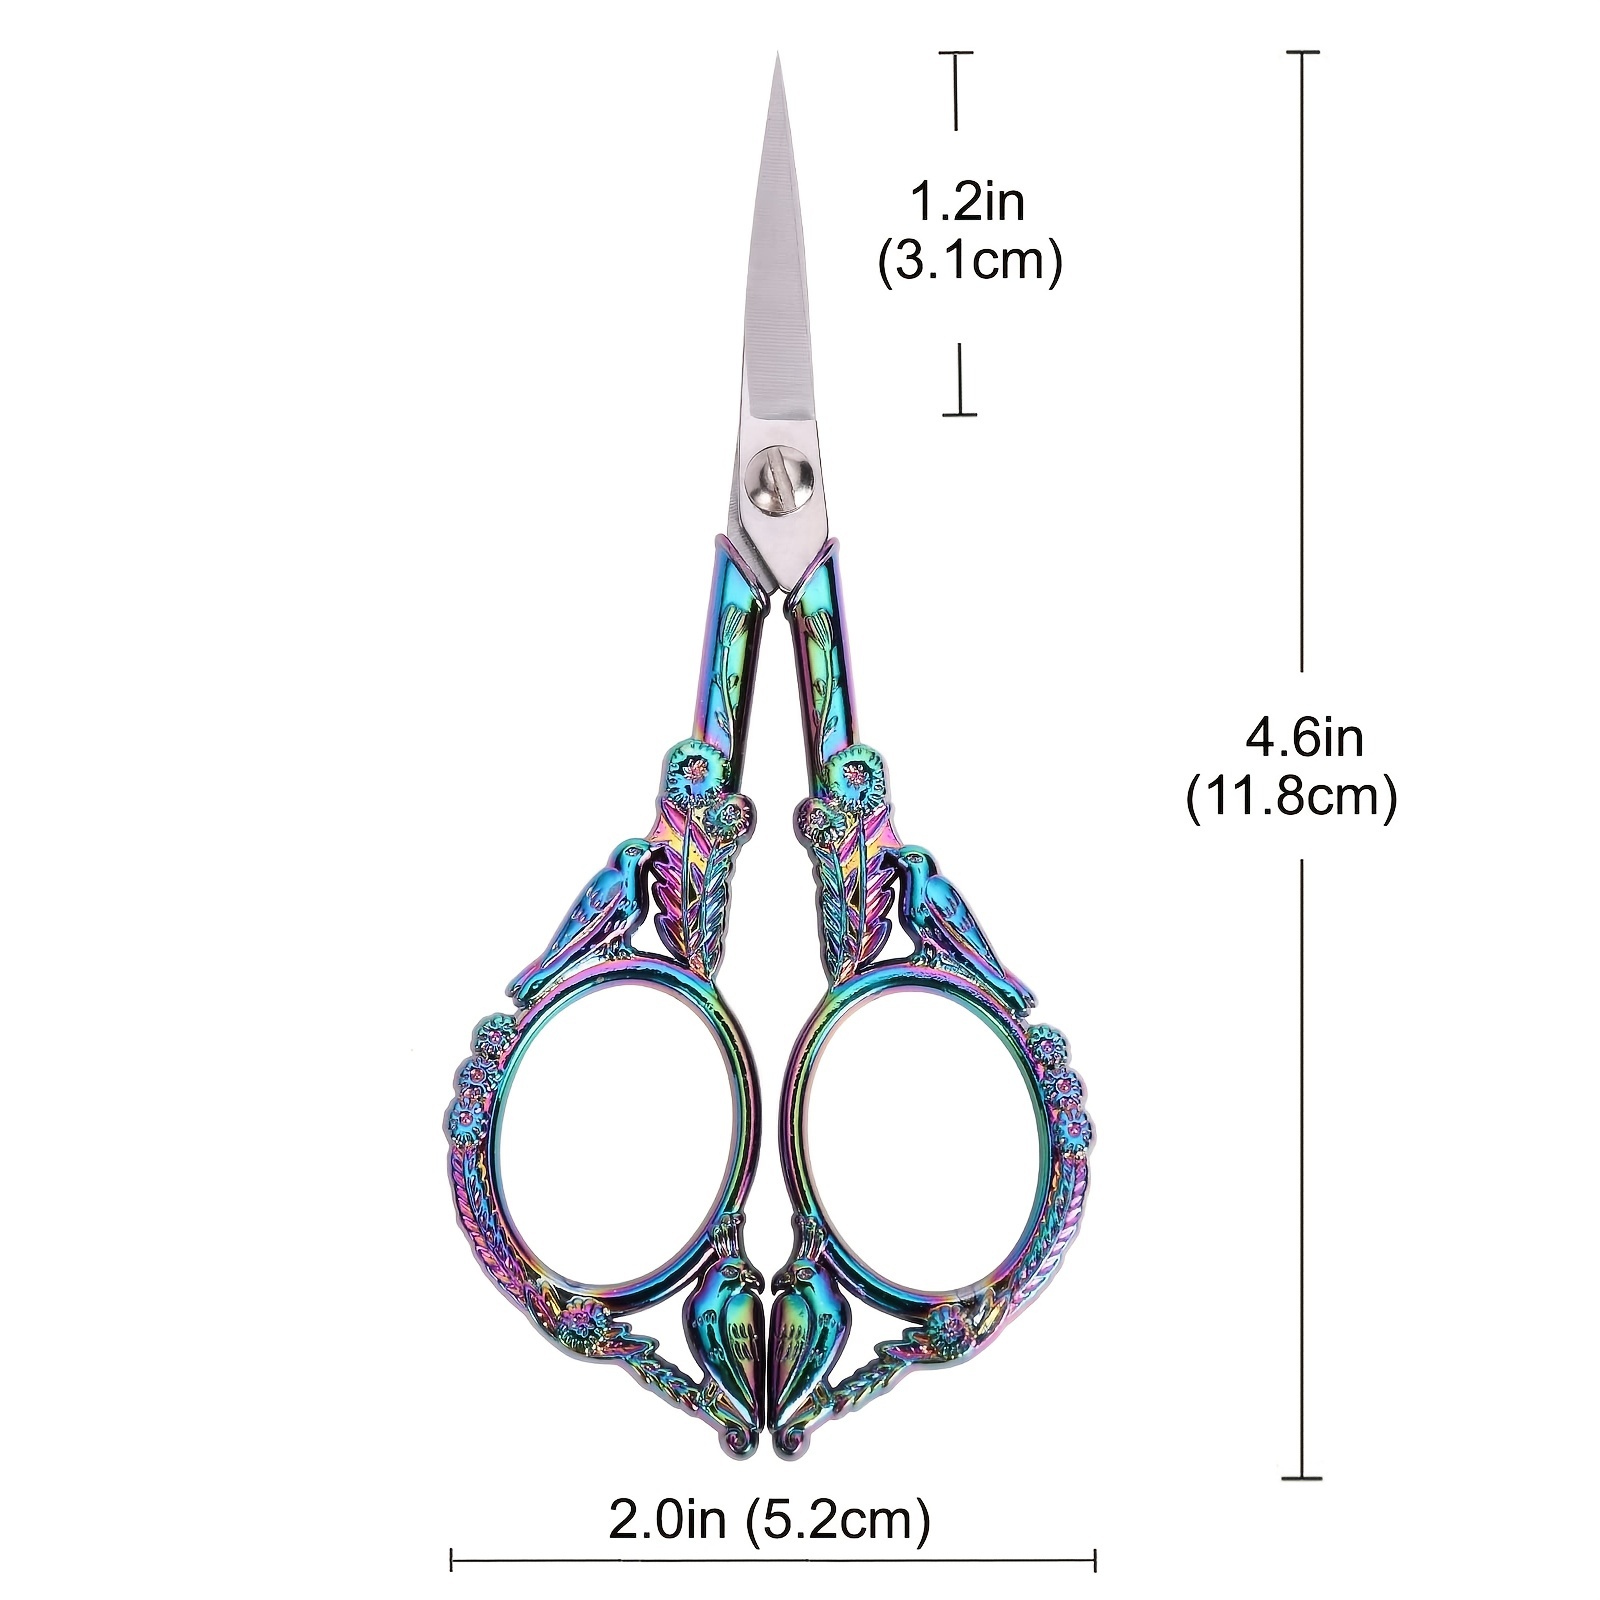 Sharp and beautiful little scissors - Victorian model